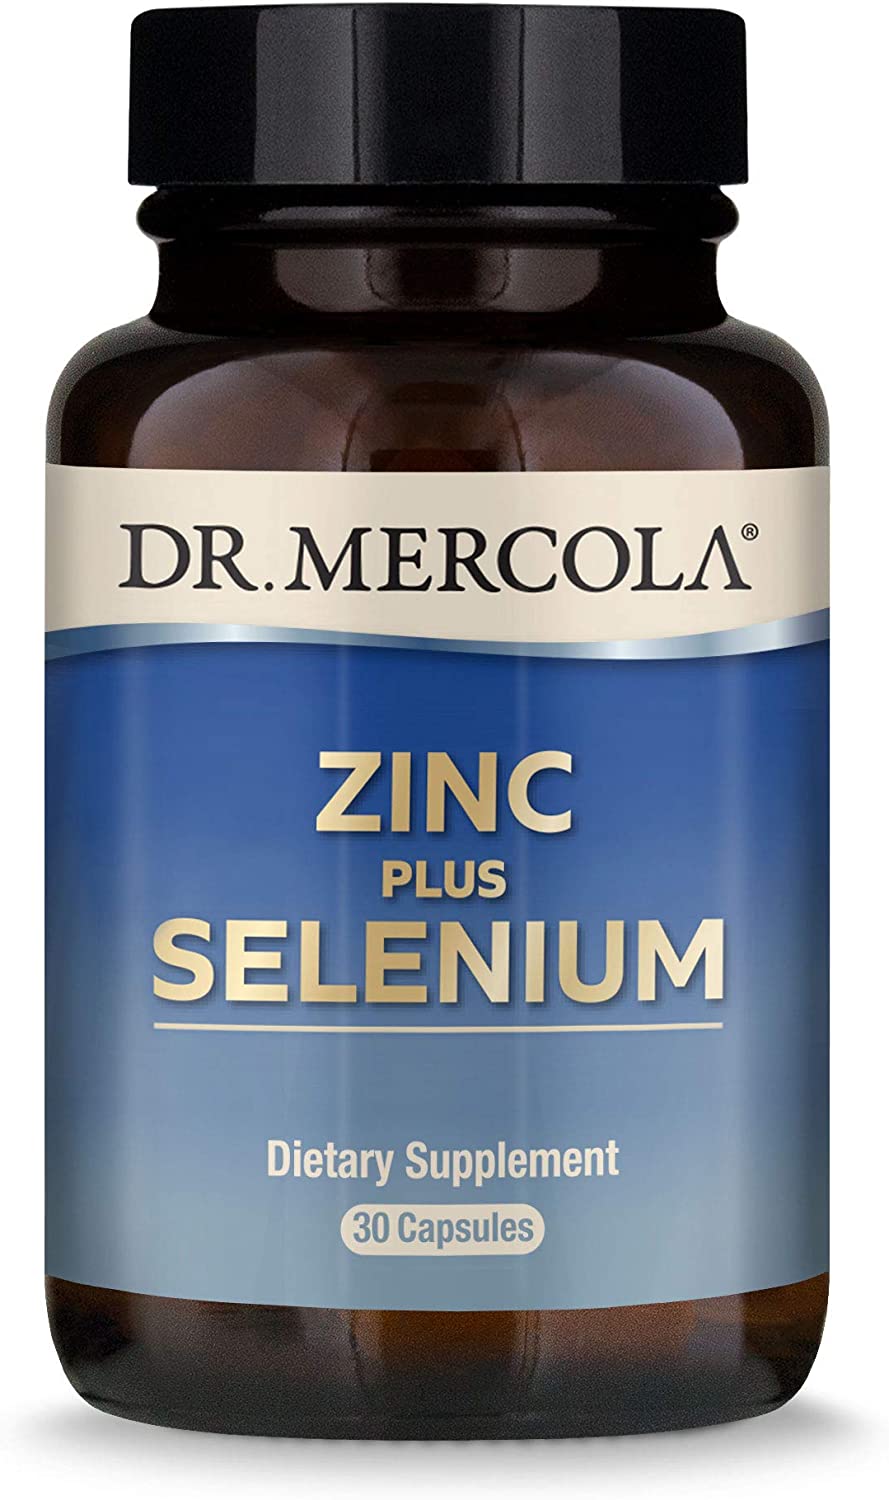 Dr Mercola Zinc Plus Selenium - 30 Day Supply